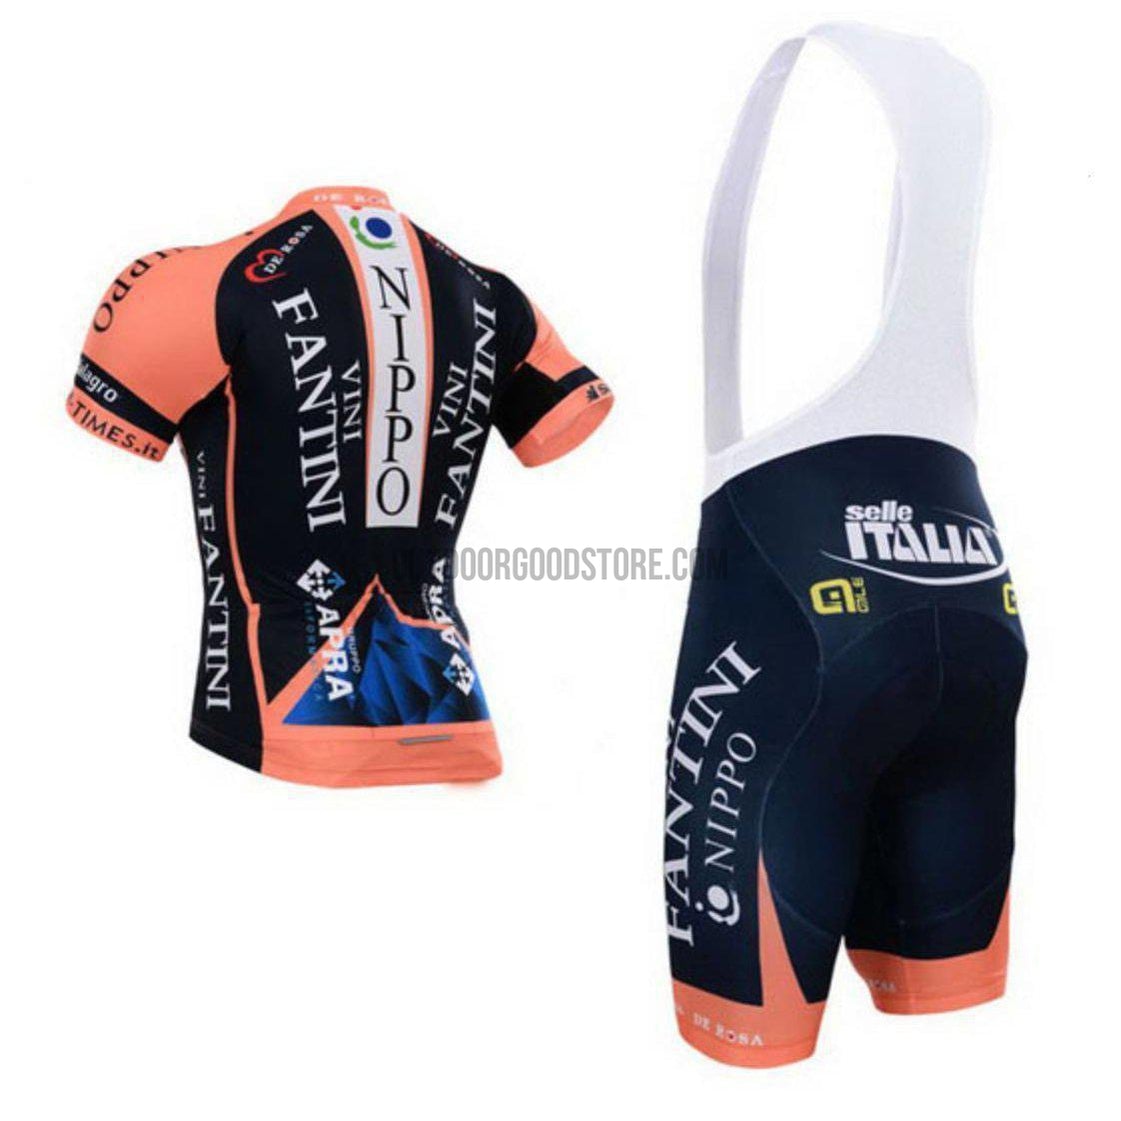 Vini Fantini Retro Cycling Short Jersey Kit – Outdoor Good Store